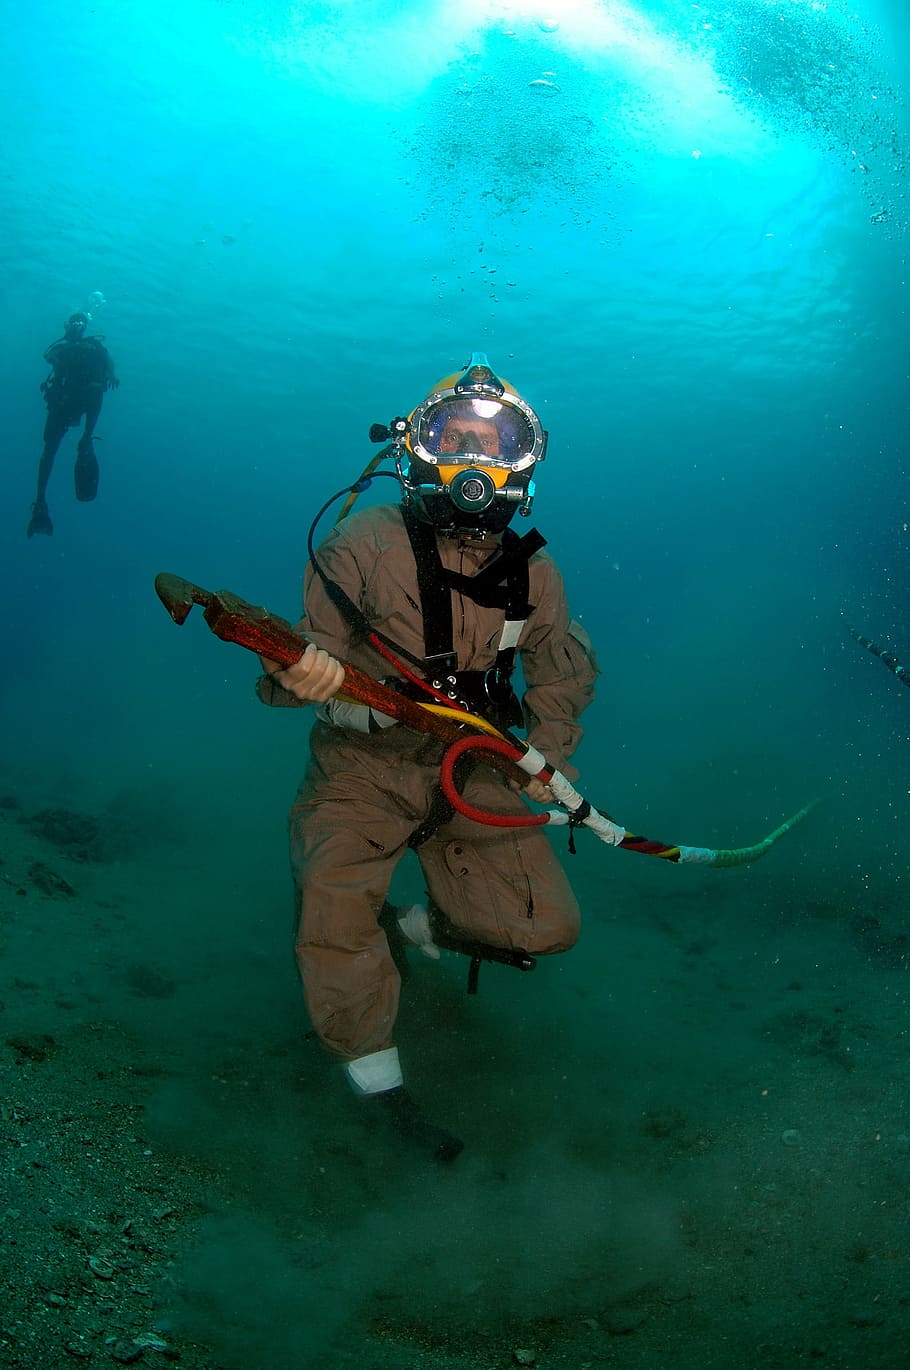 diver, salvage, navy, military, ocean floor, walking, wrench, tool, equipment, working